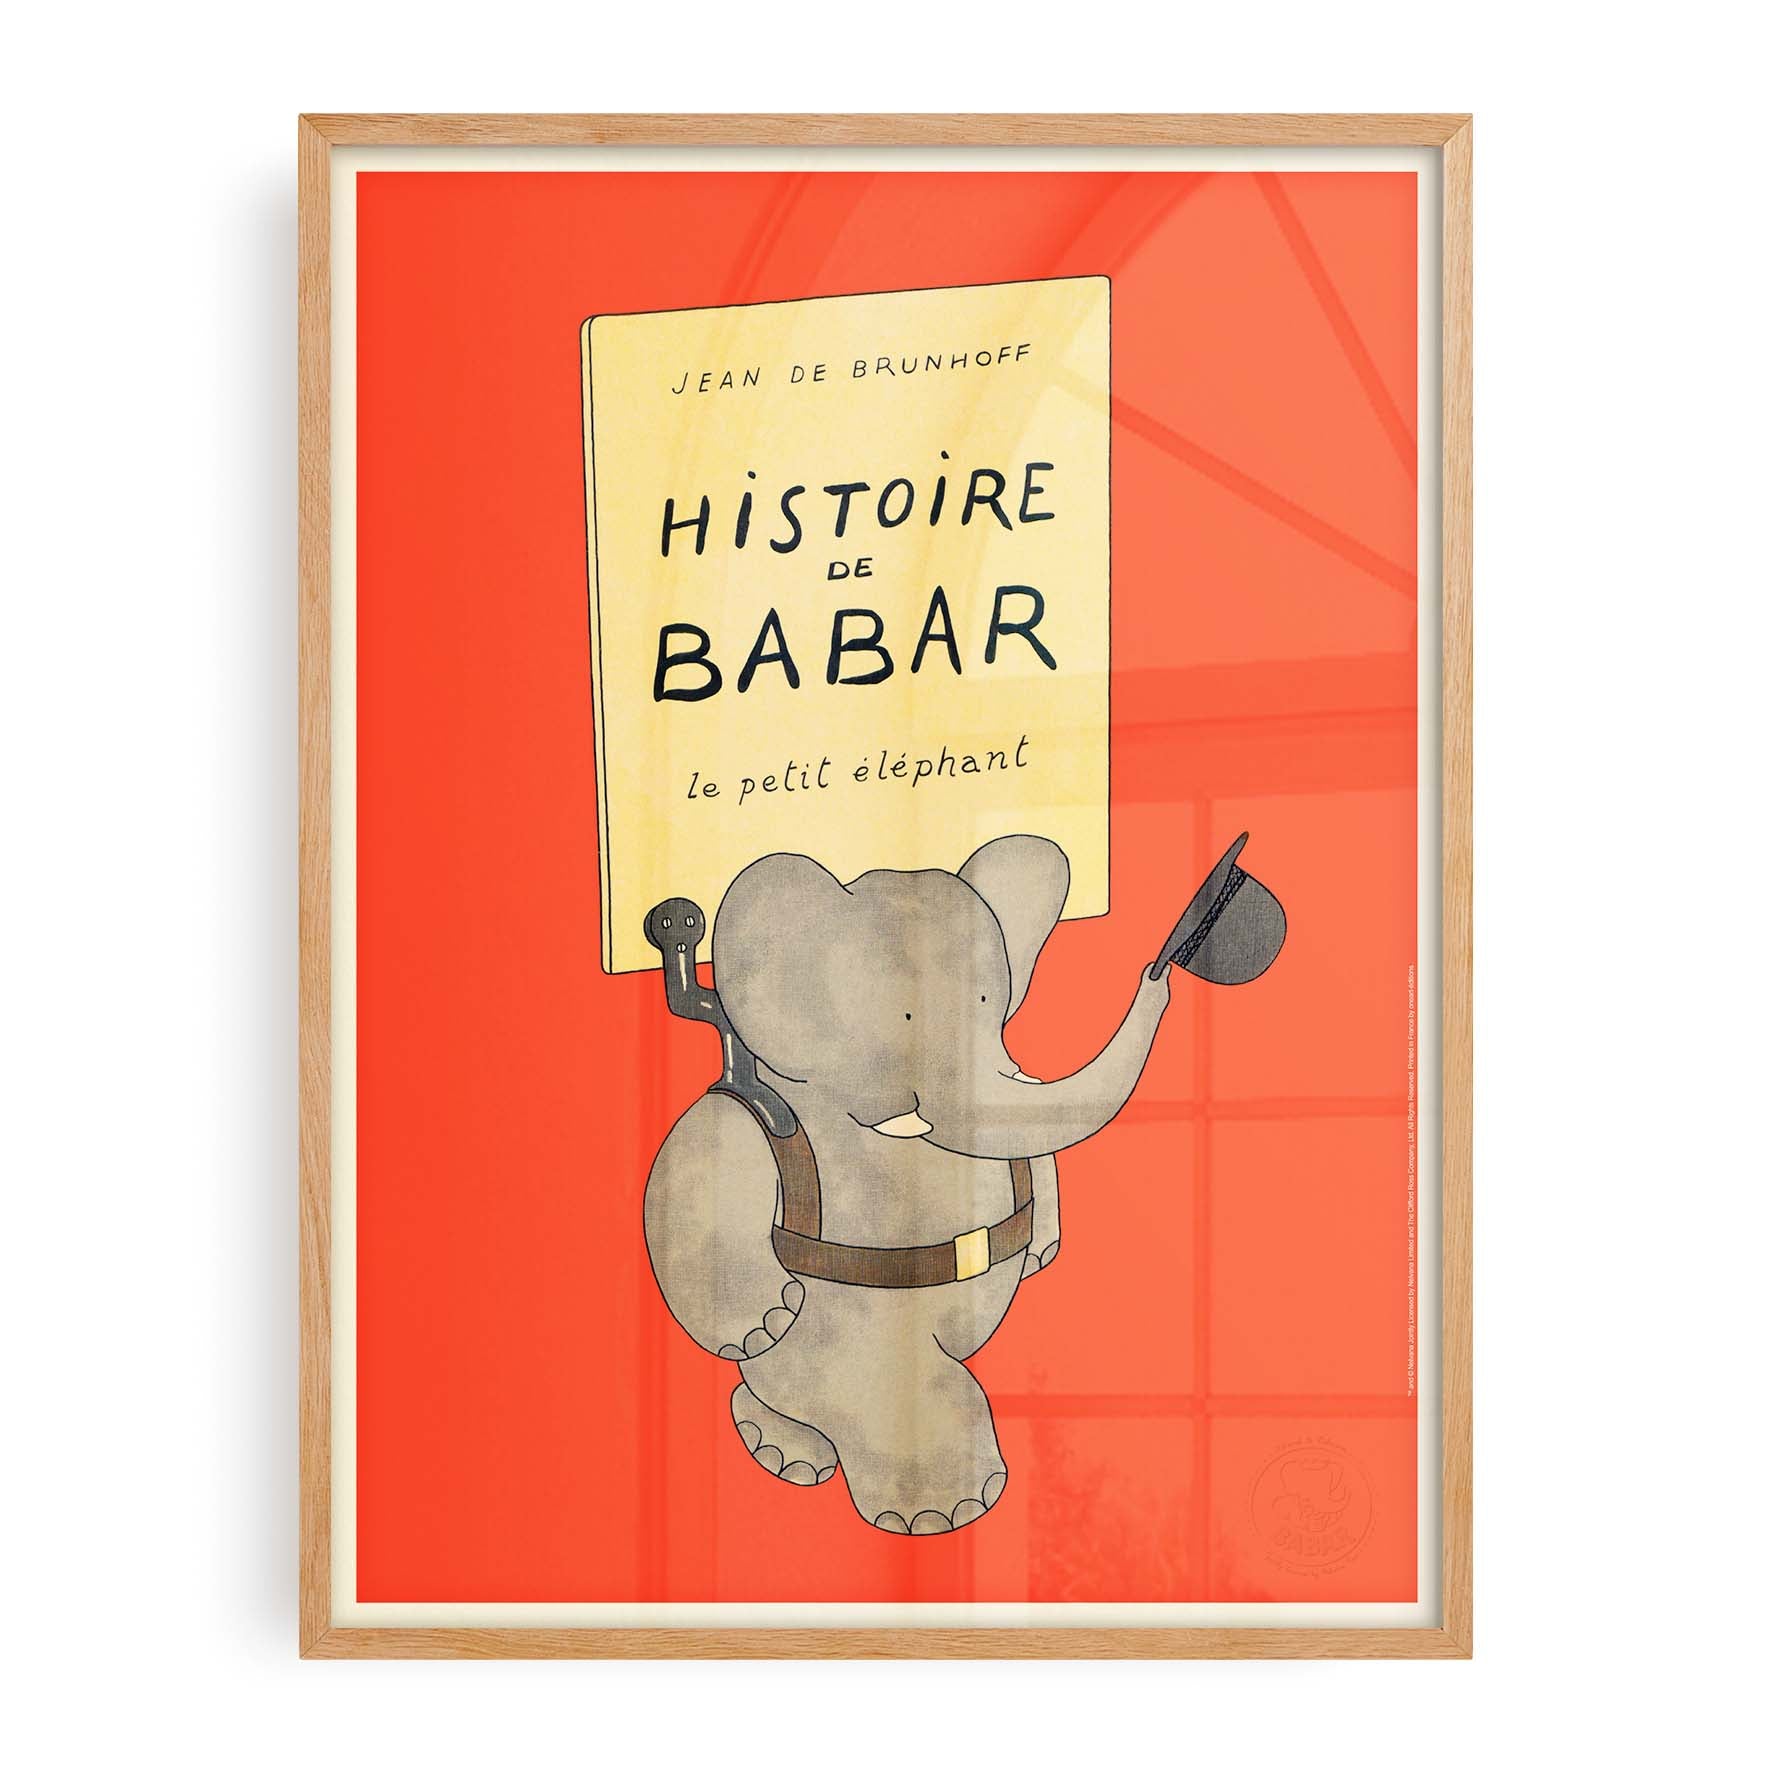 Affiche Histoire de Babar - orange-oneart.fr